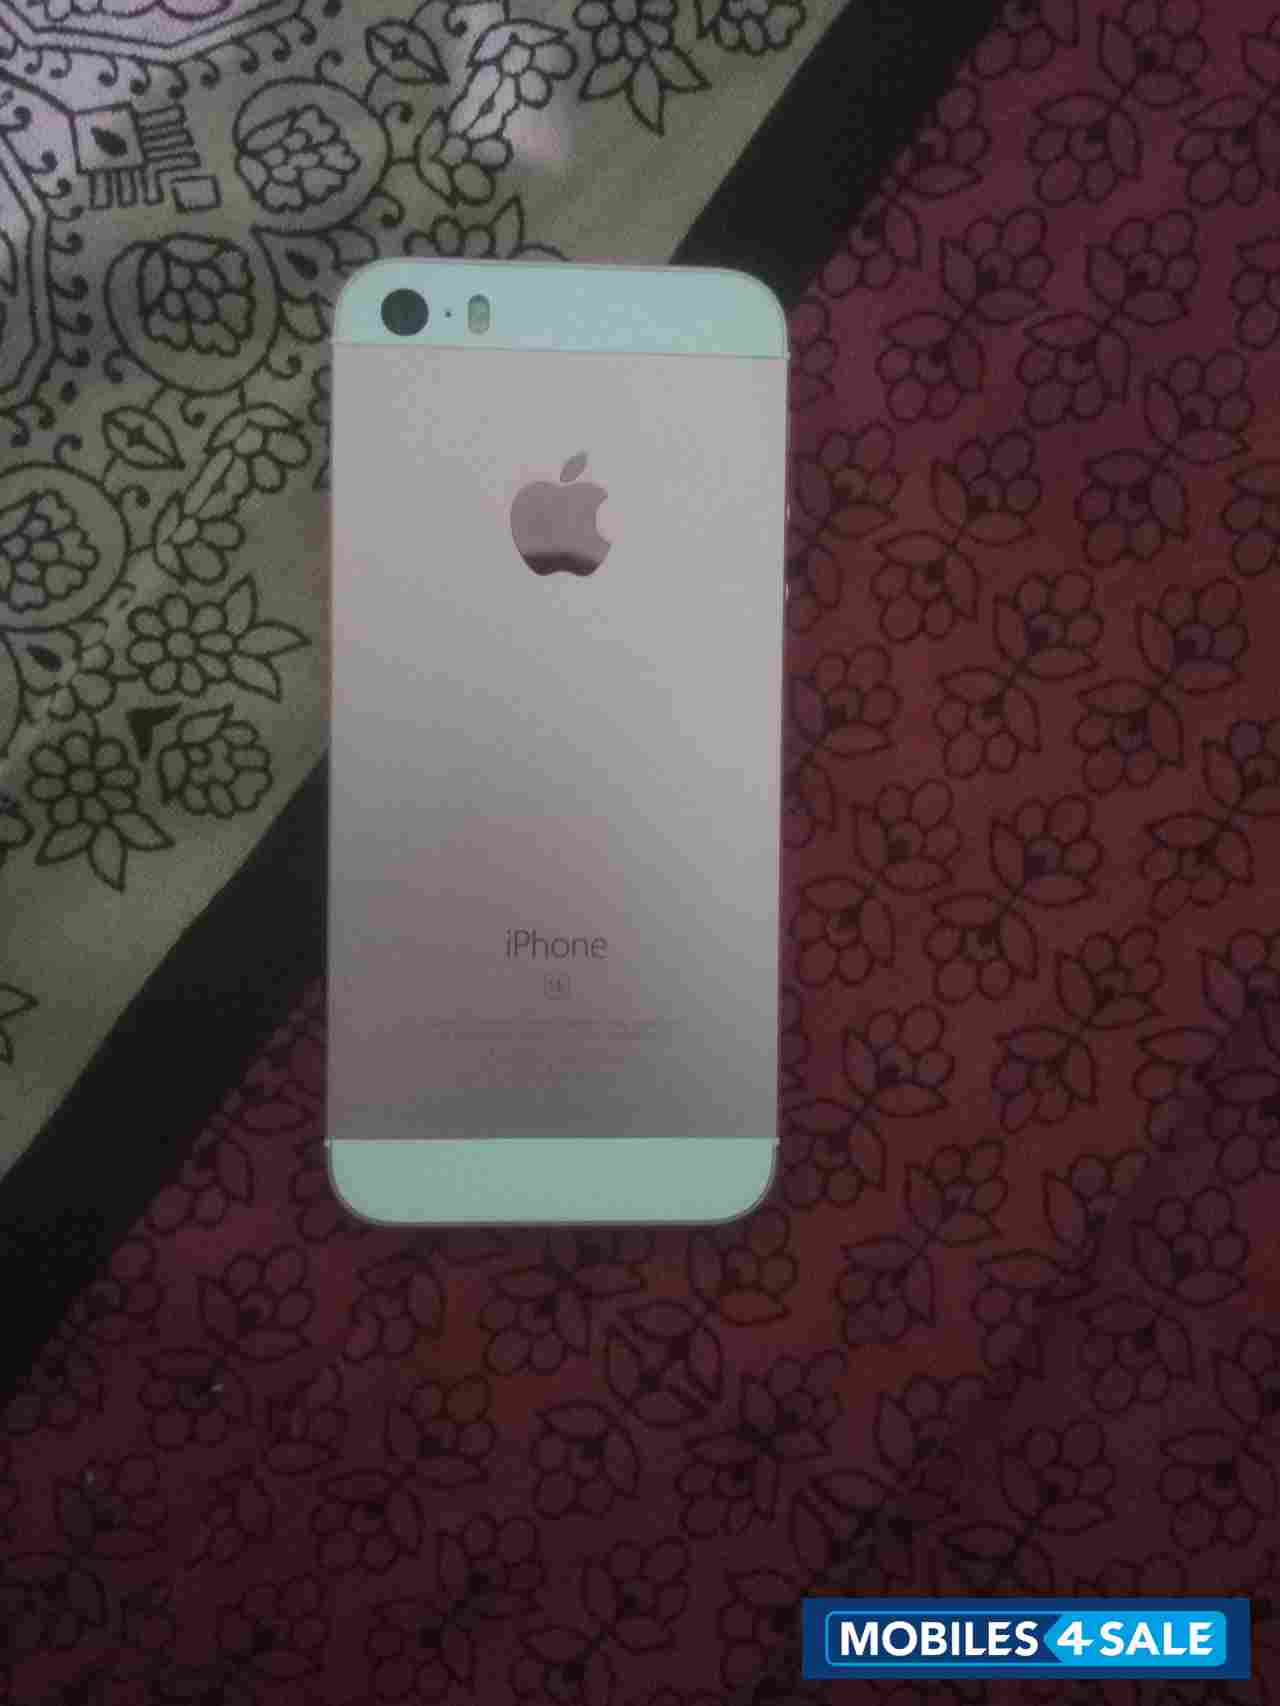 Rose Gold 32 Gb Apple iPhone SE